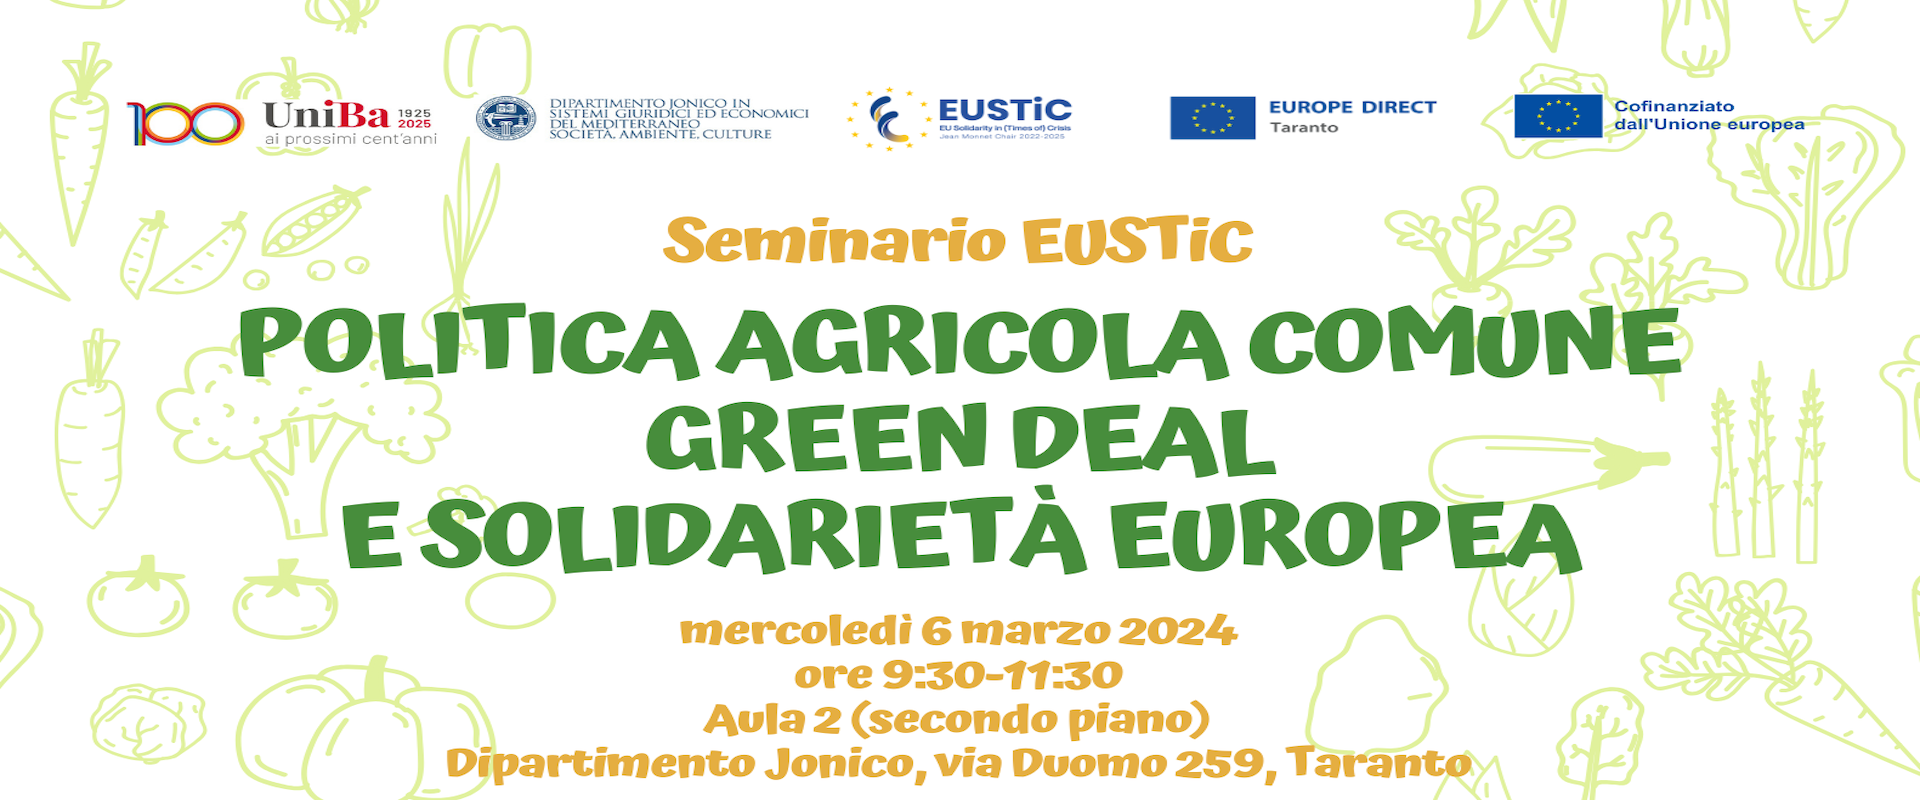 Politica agricola comune, Green Deal e solidarietà europea